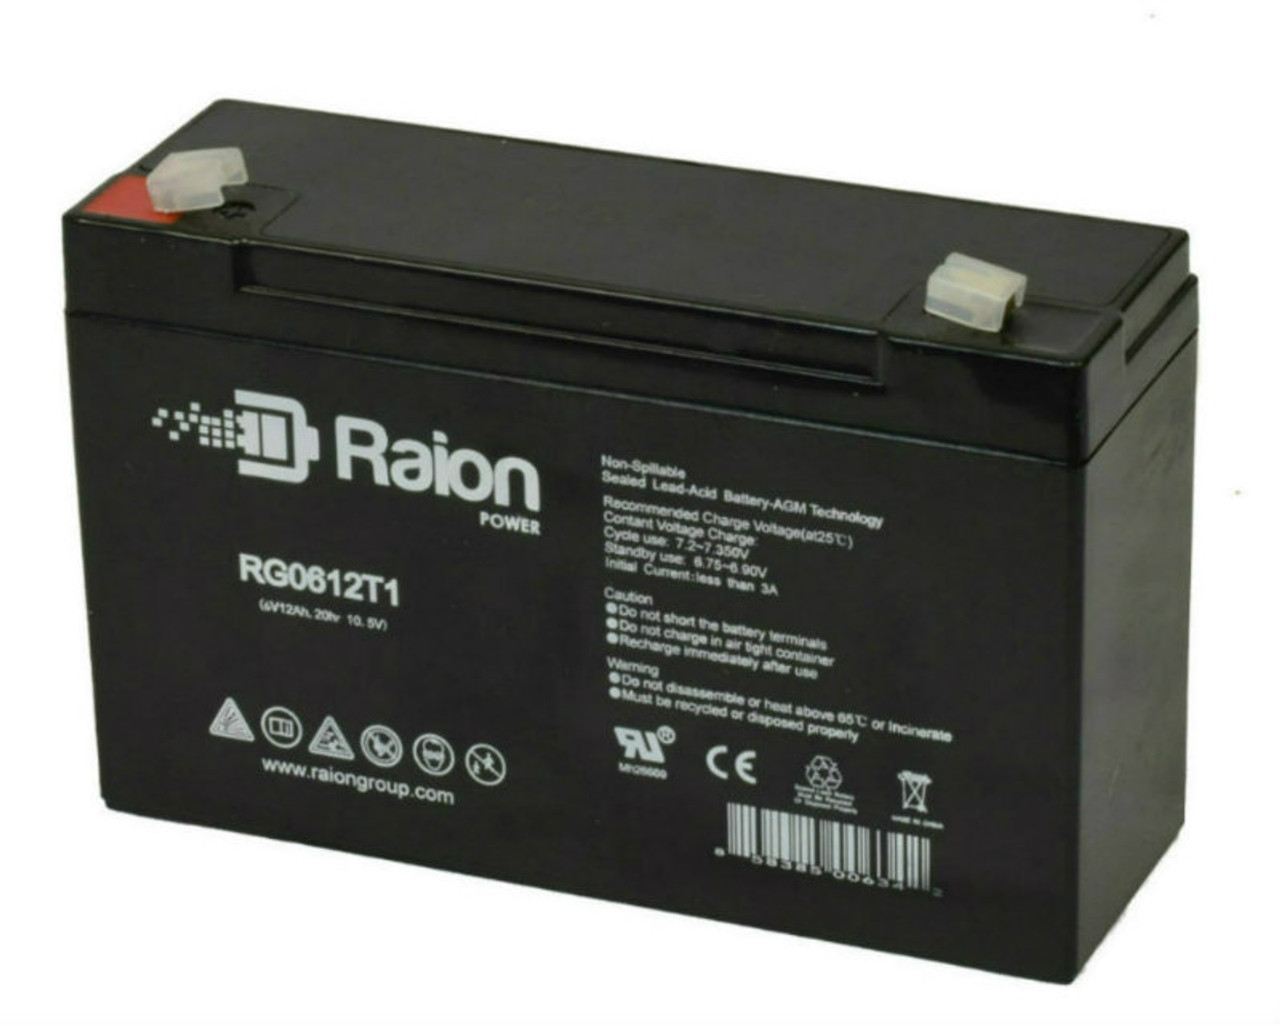 Raion Power RG06120T1 6V 12Ah Replacement UPS Battery Cartridge for Tripp Lite Smart 1400